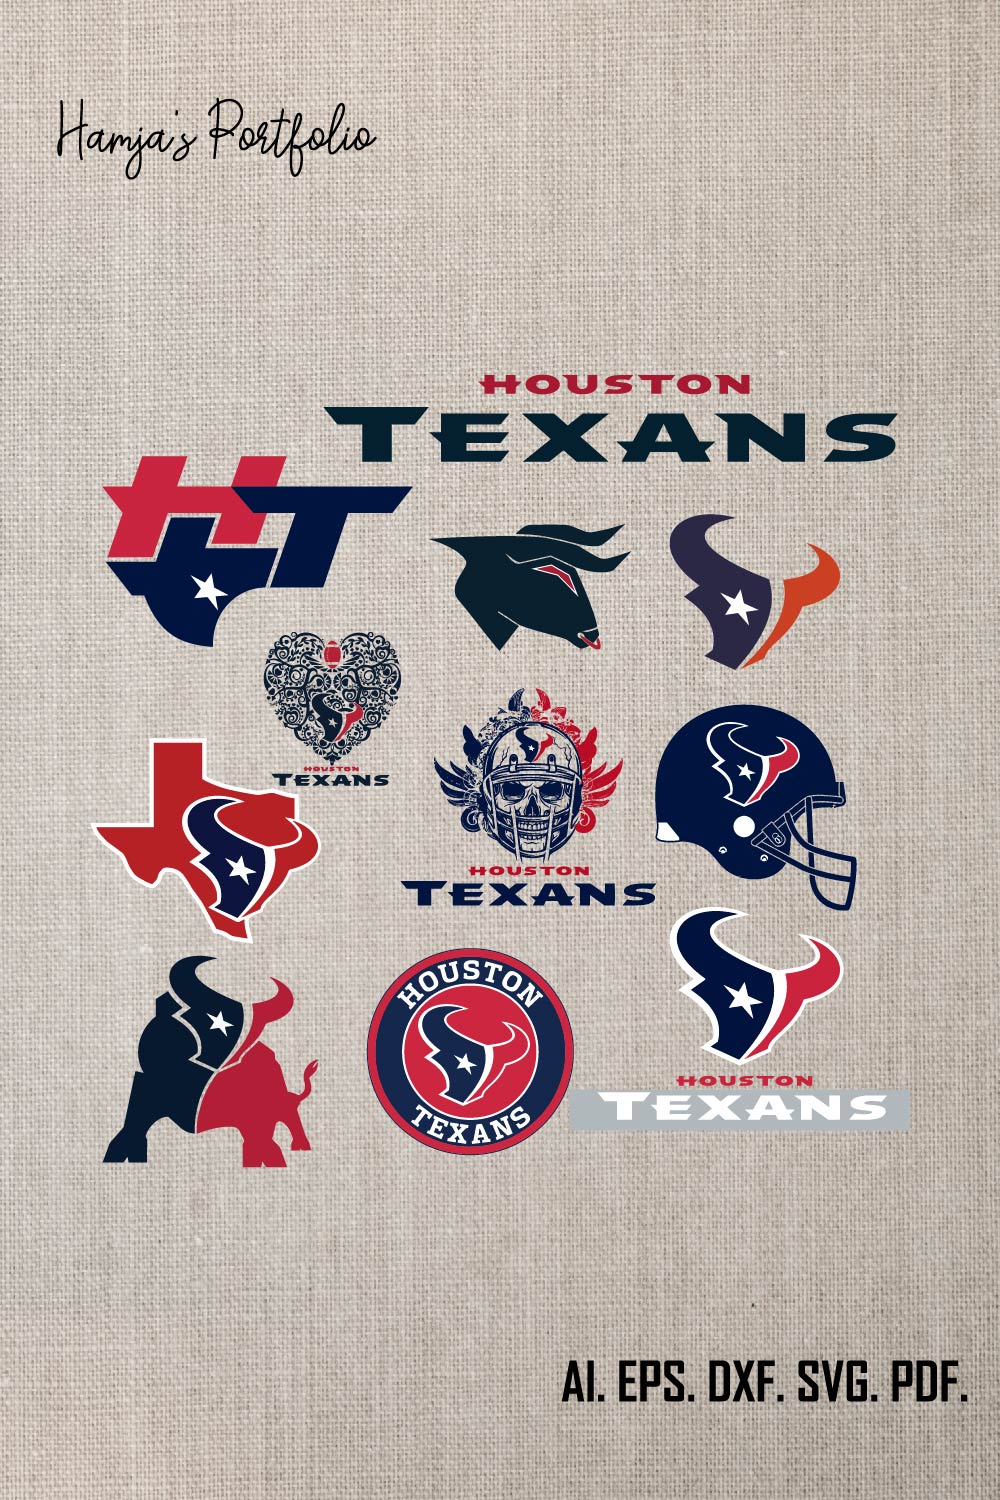 Houston Texans Vector logo Svg pinterest preview image.